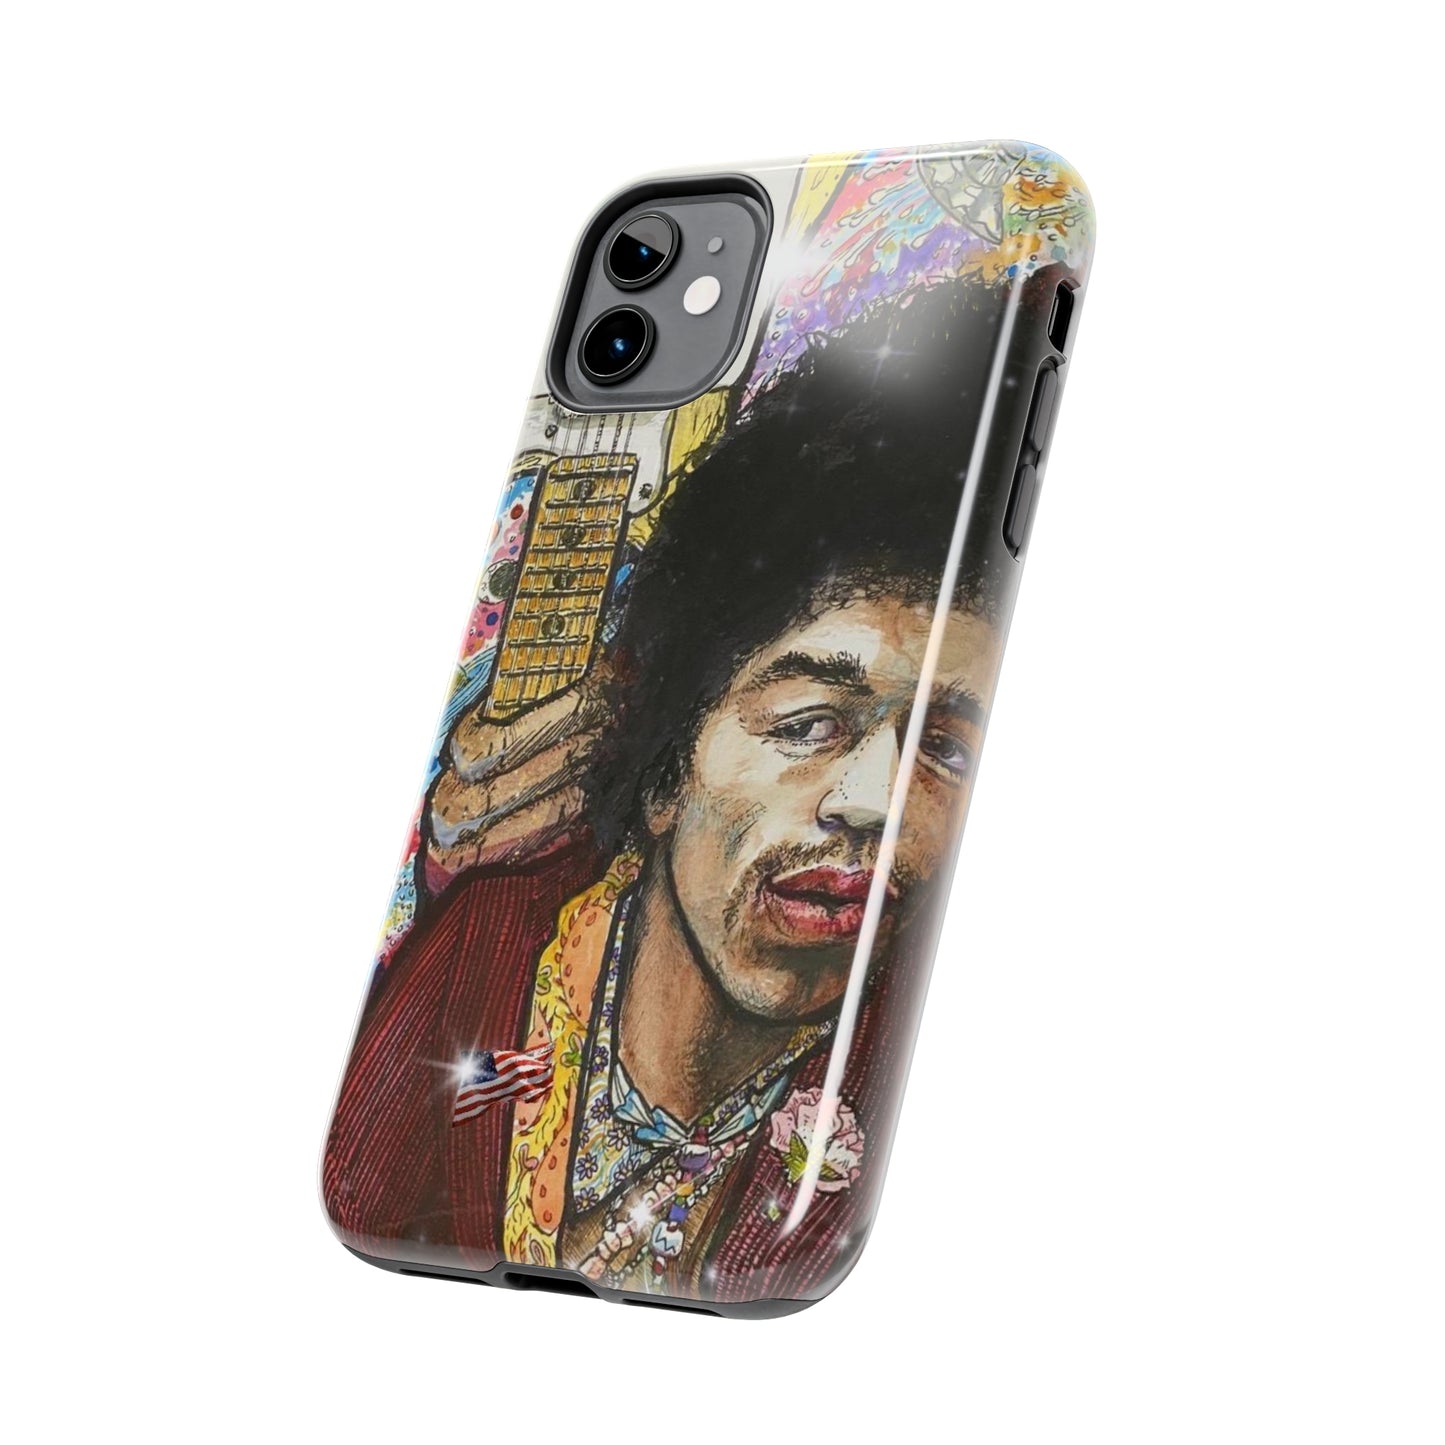 Case Mate Tough Phone Cases Featuring Jimi Hendrix Fan art by #ShallyBrady